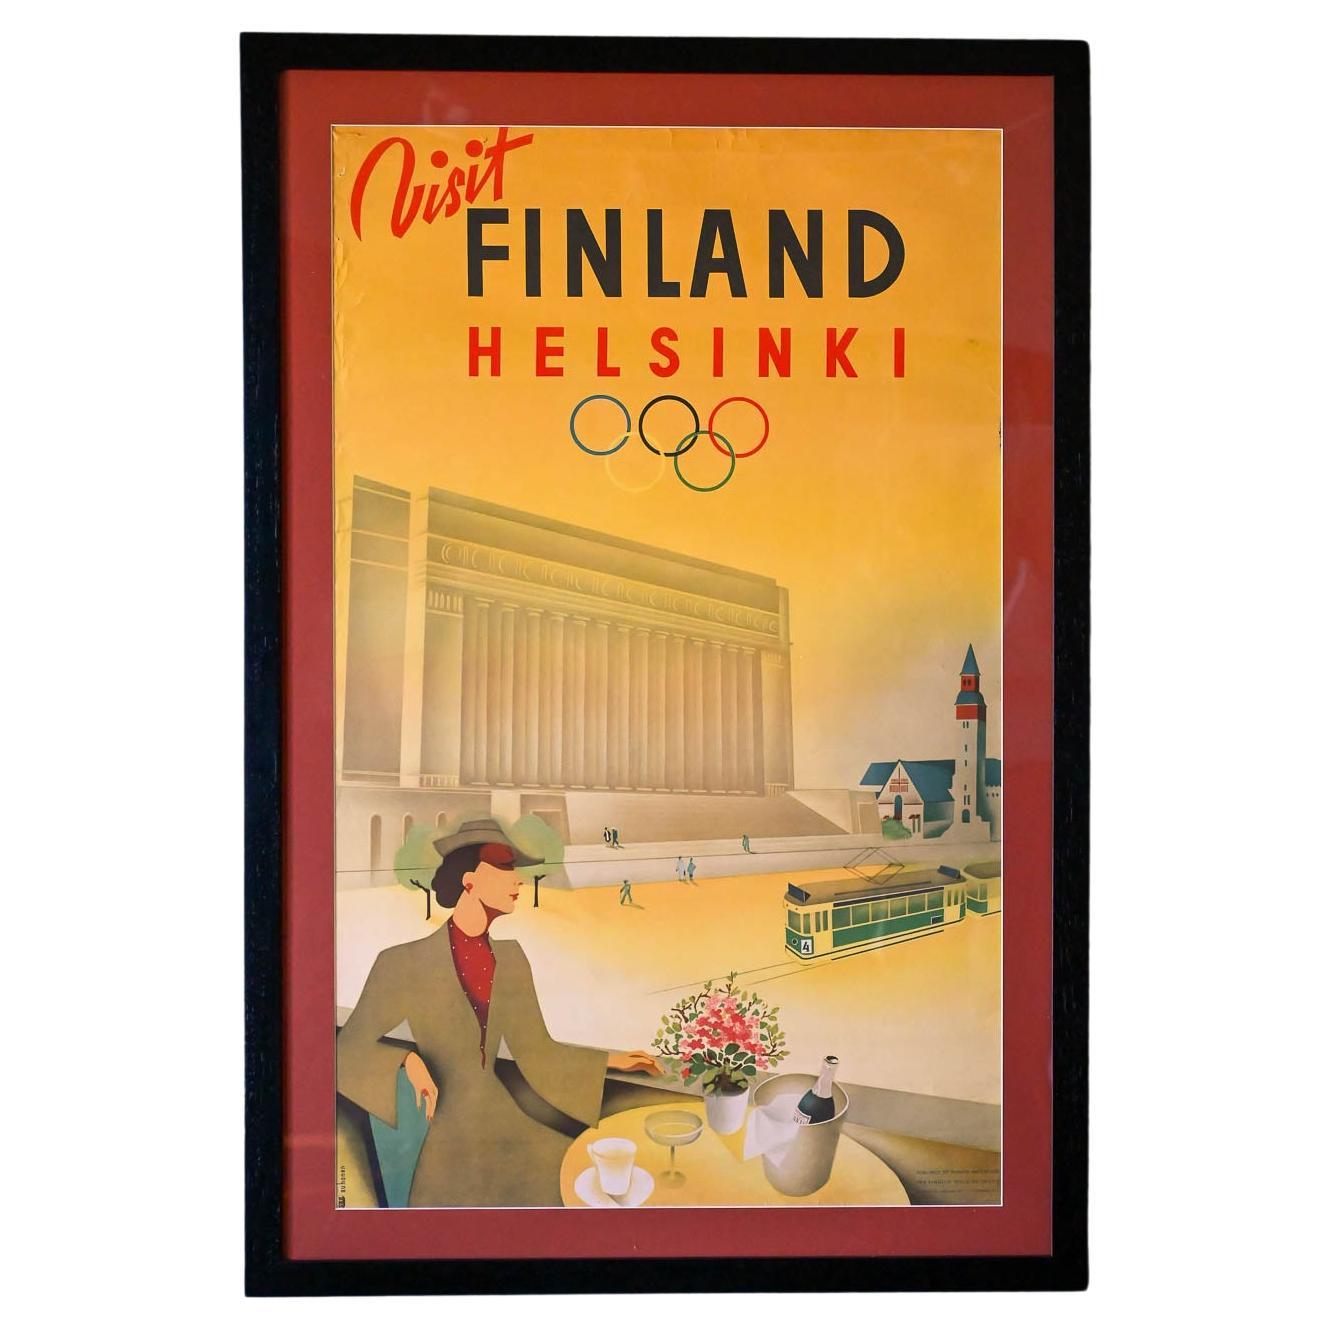 Original Finland Travel Poster by Jorma Suhonen, 1952